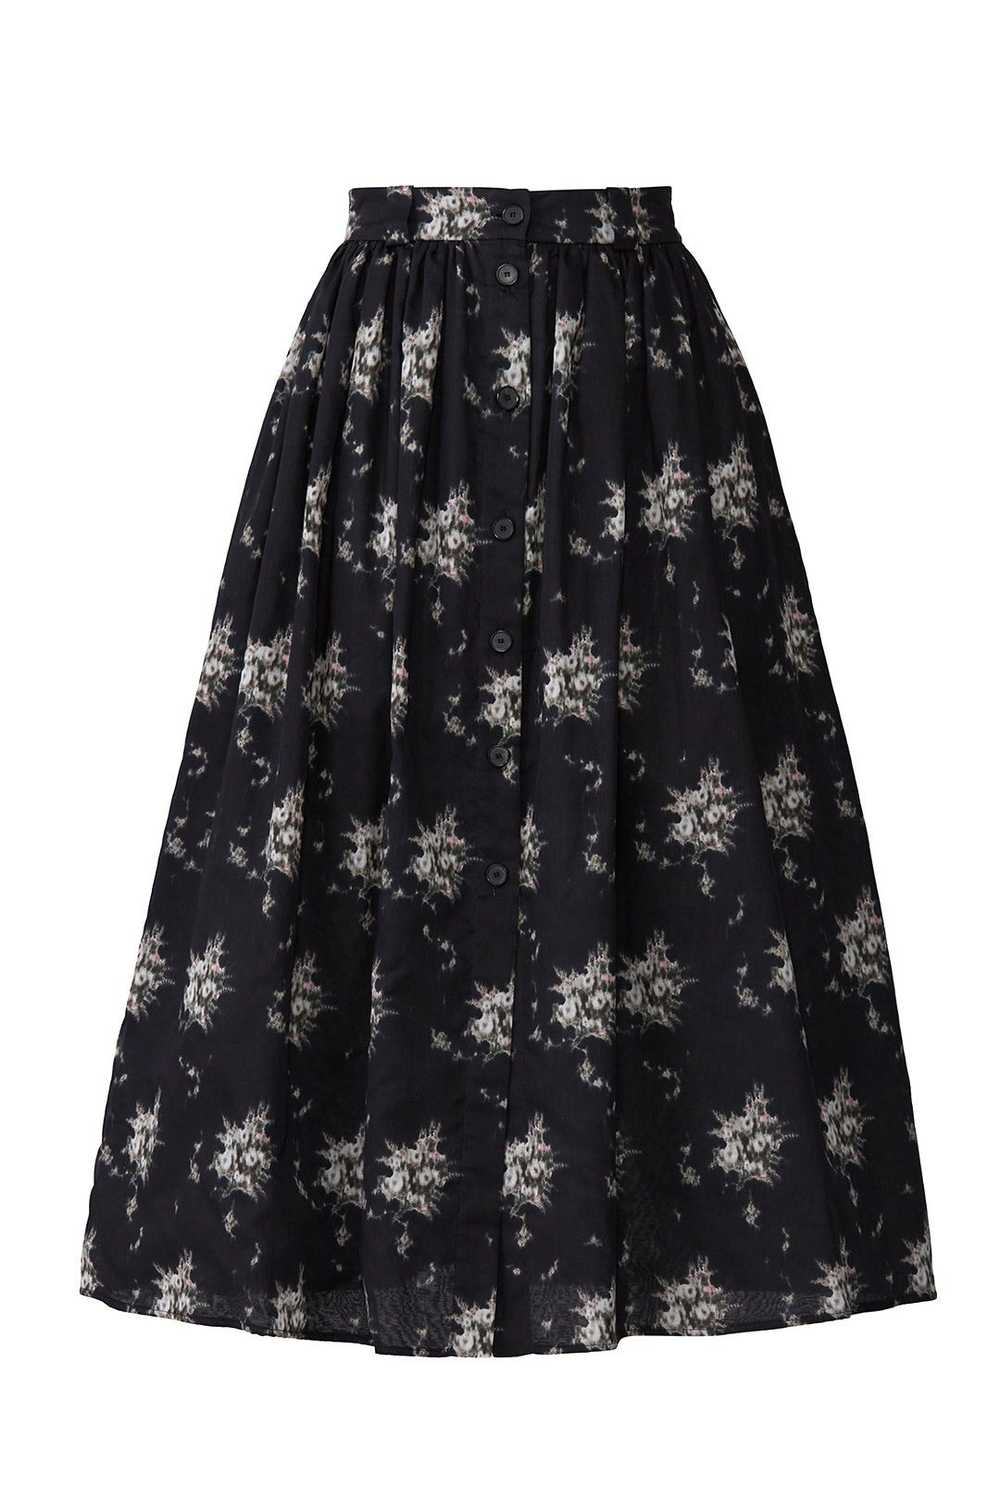 Brock Collection Olivio Floral Midi Skirt - image 4